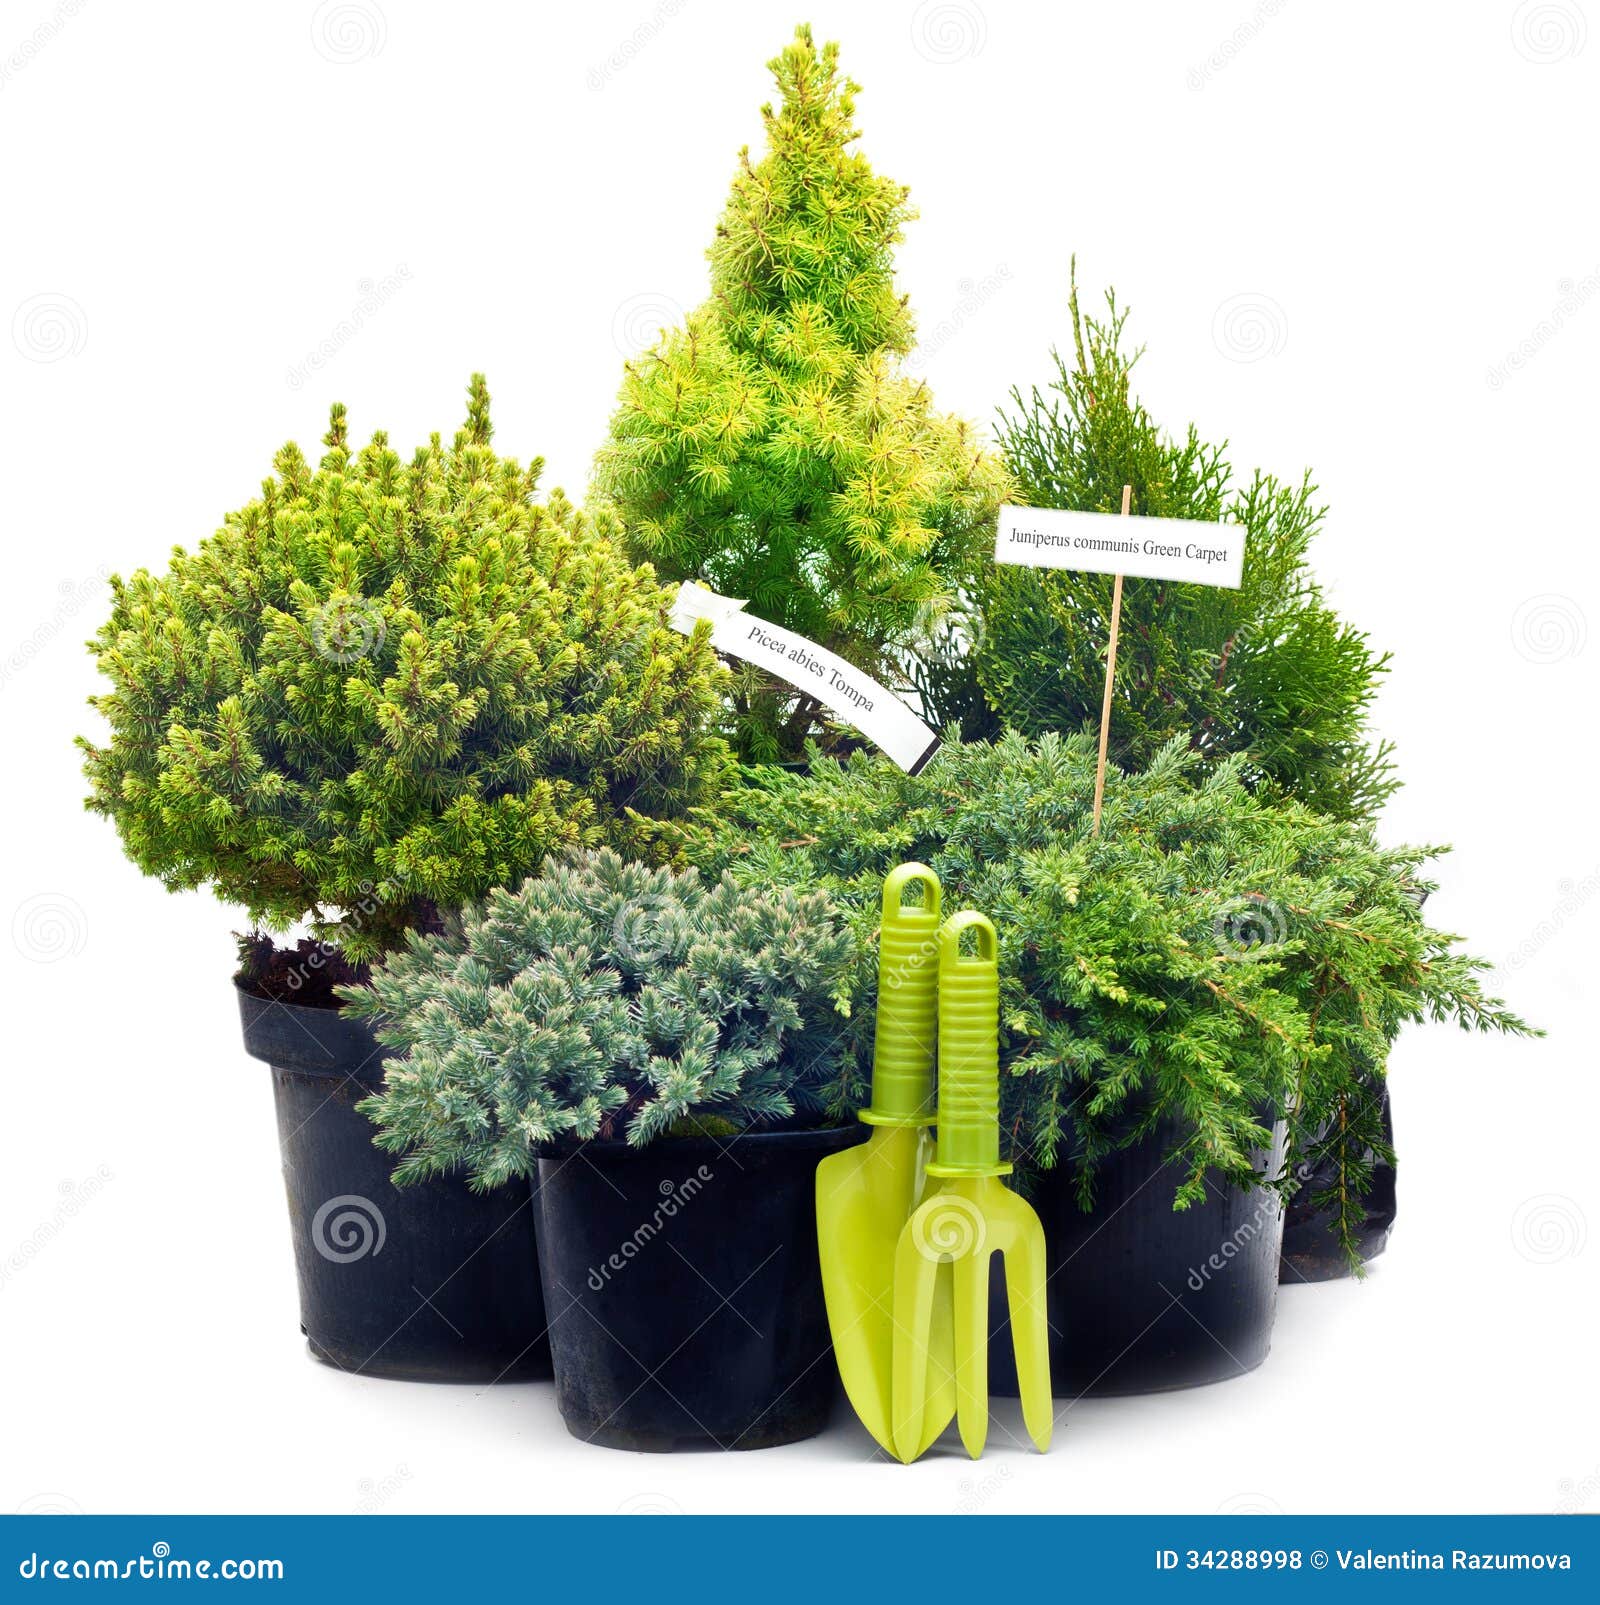 conifer sapling trees in pots